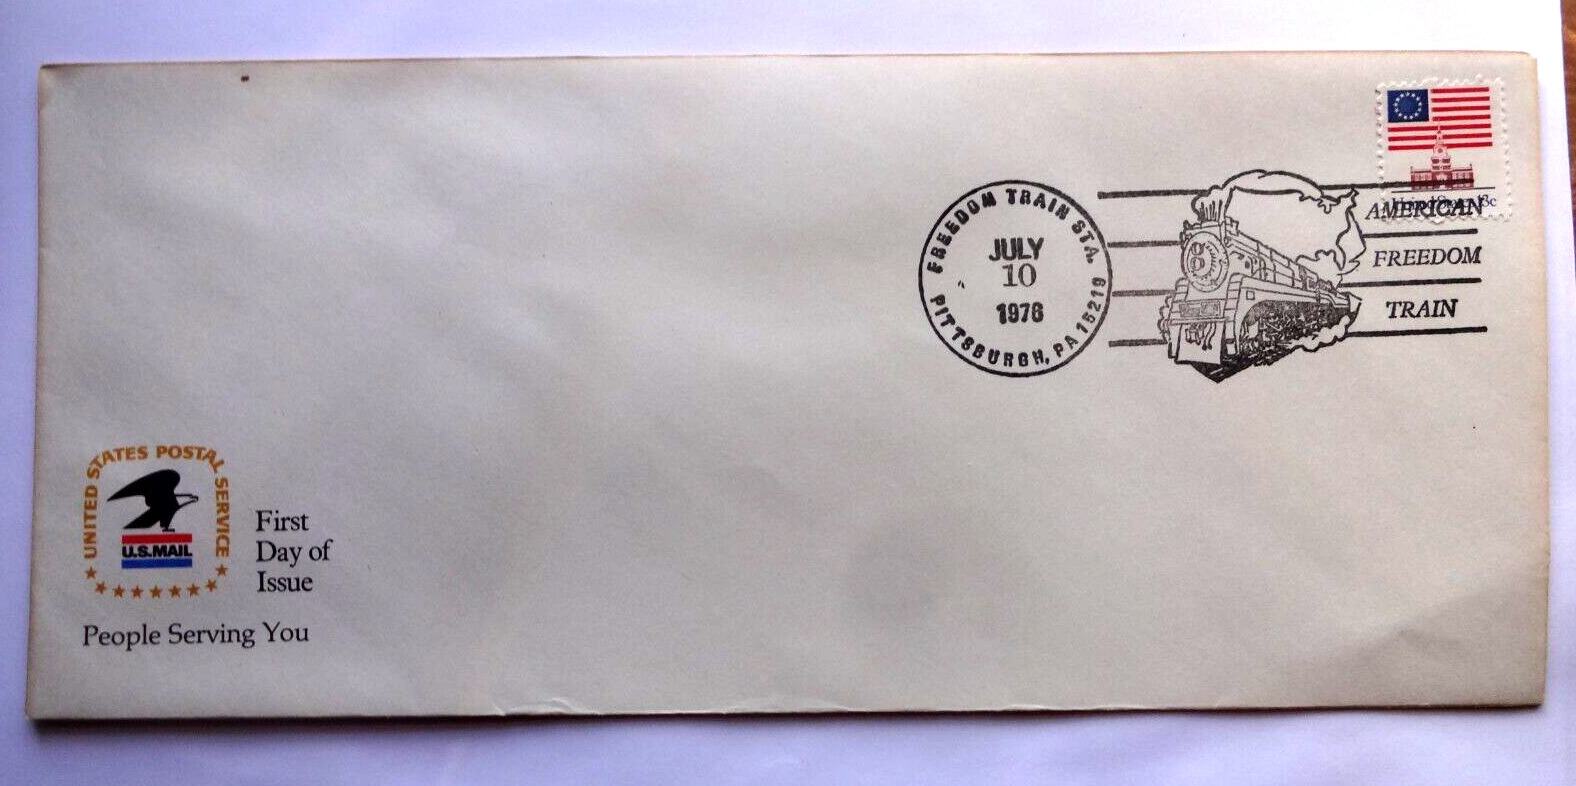 JULY 10, 1976 AMERICAN FREEDOM TRAIN SOUVENIR, FDE Envelope, Pittsburgh PA